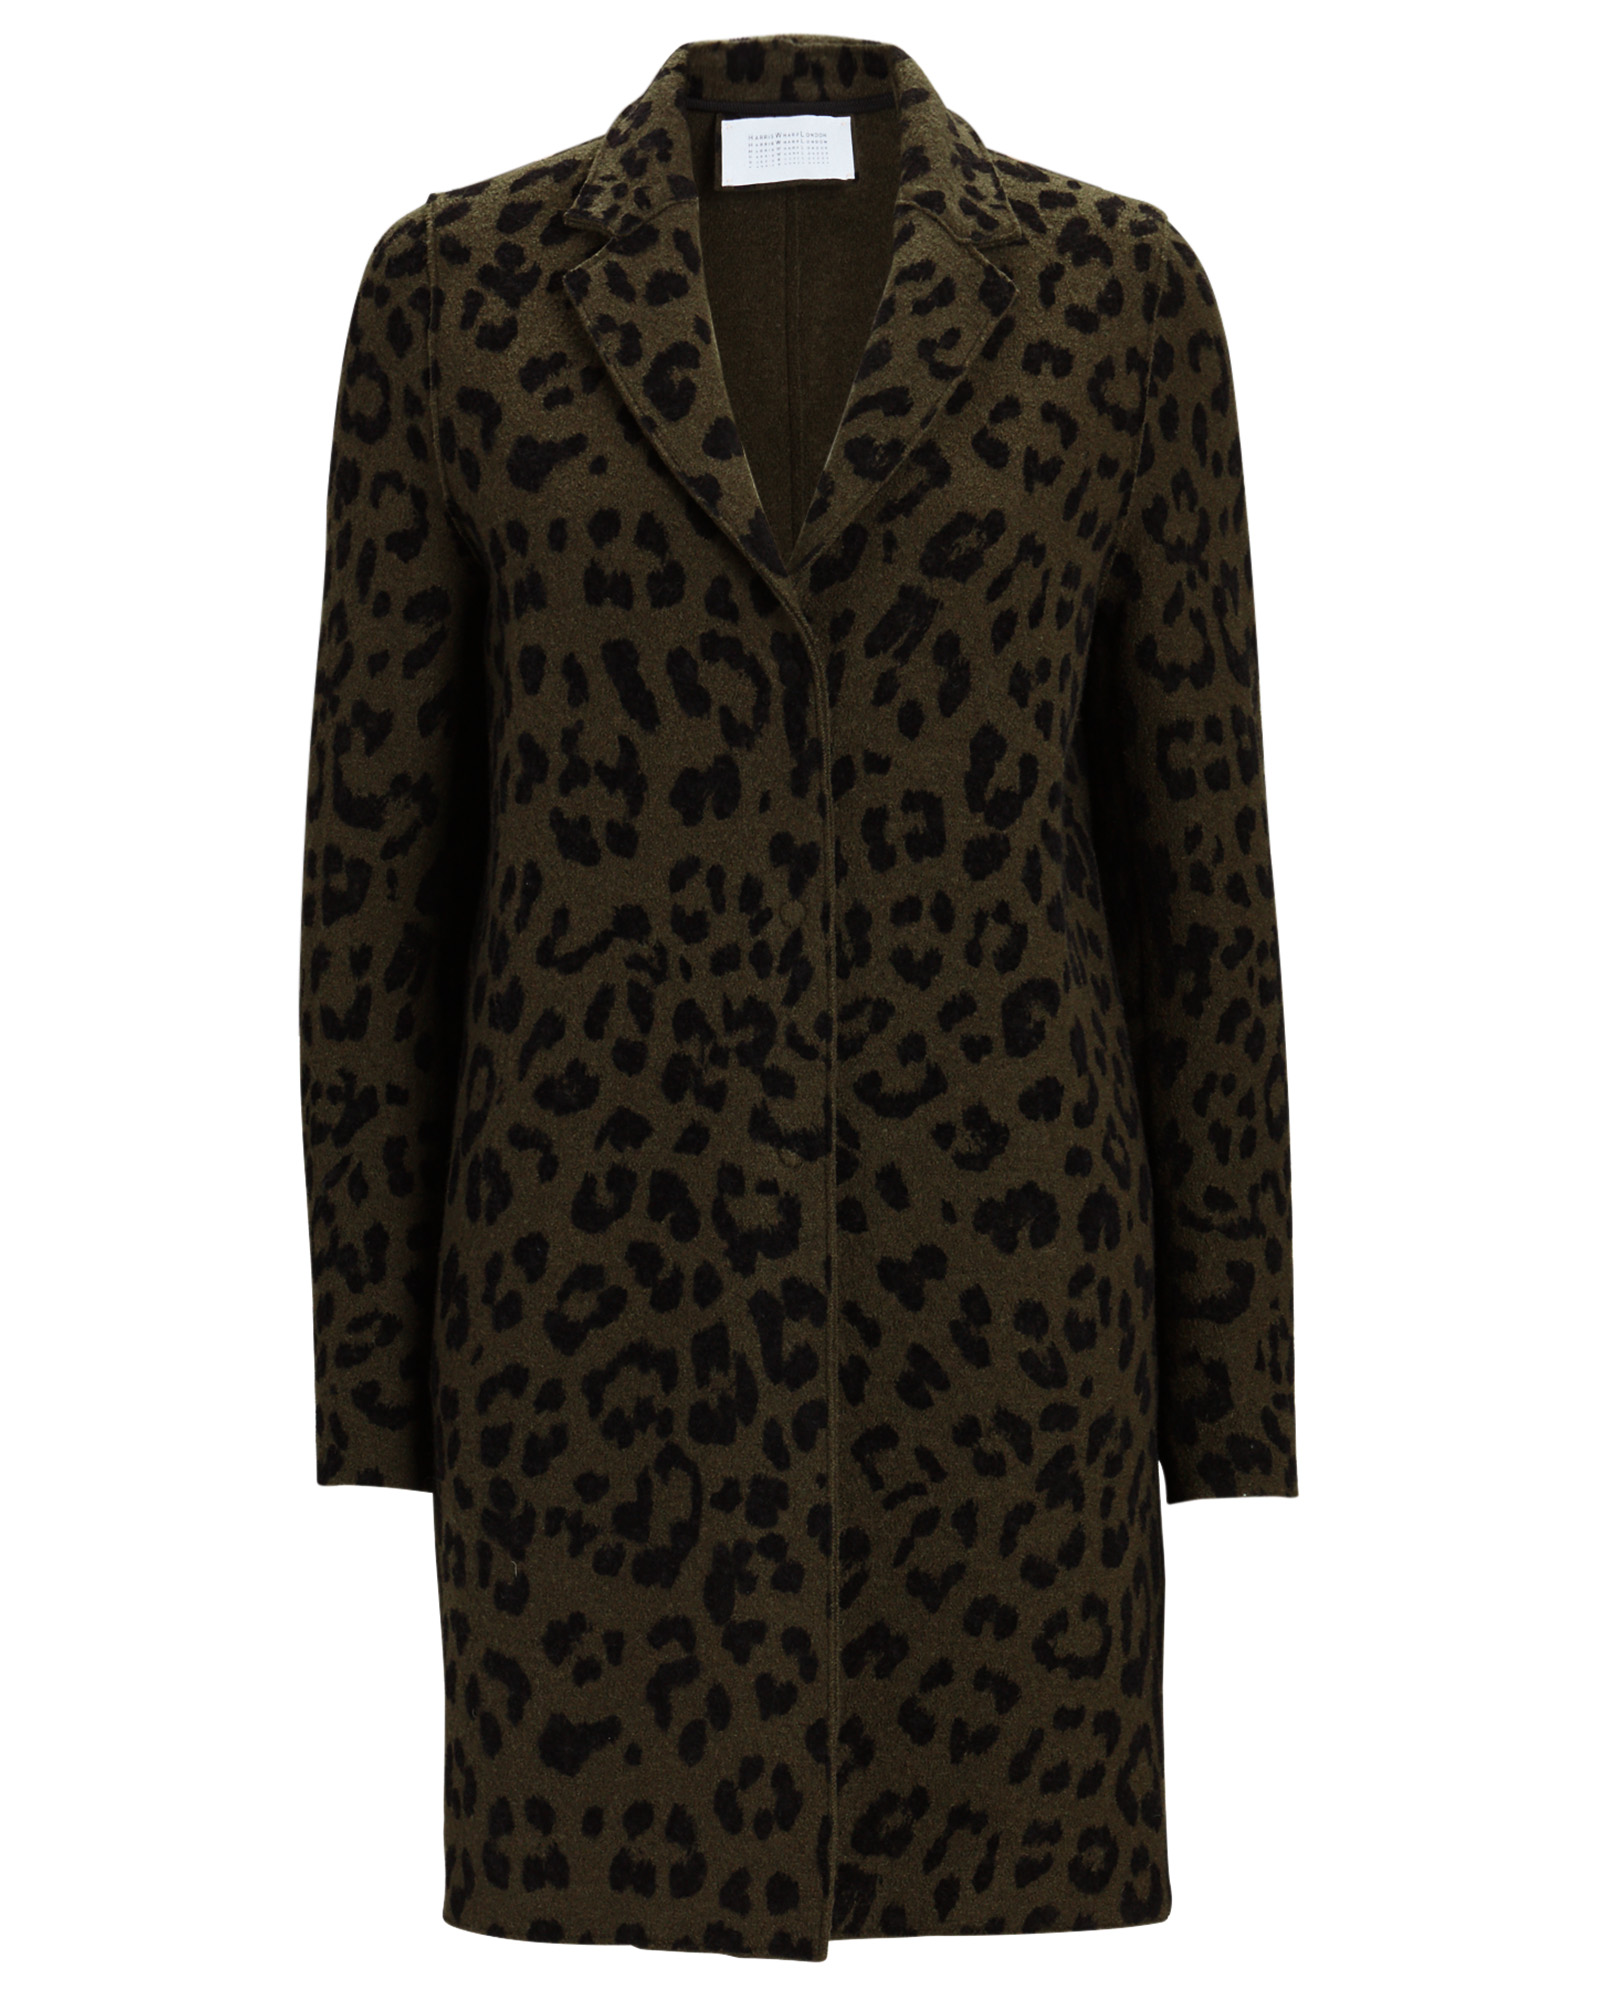 Harris Wharf London Cocoon Boiled Leopard Print Coat | INTERMIX®